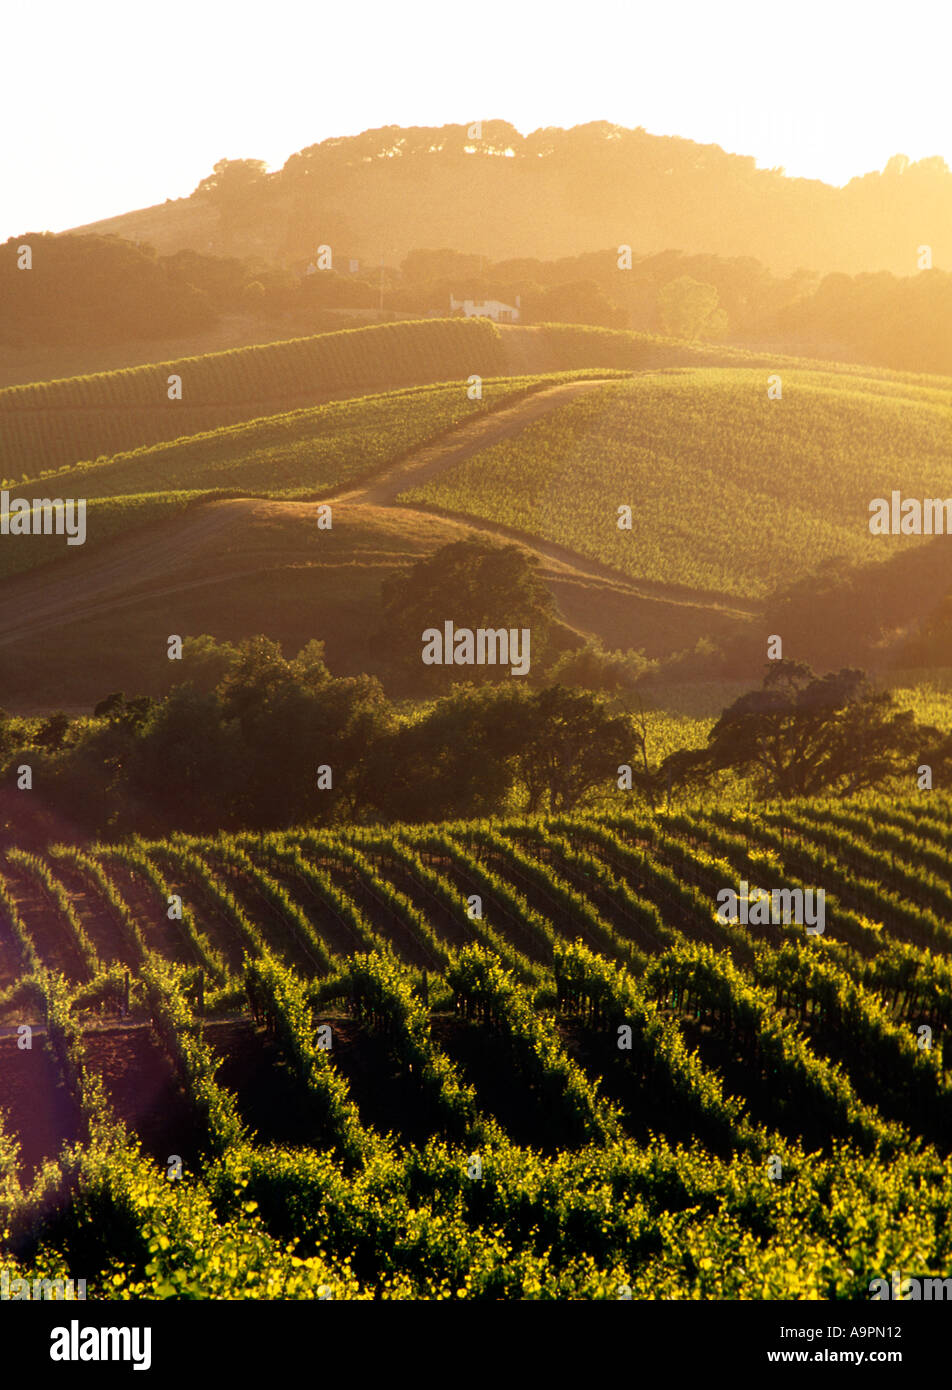 USA California Napa Valley grape vineyards Stock Photo